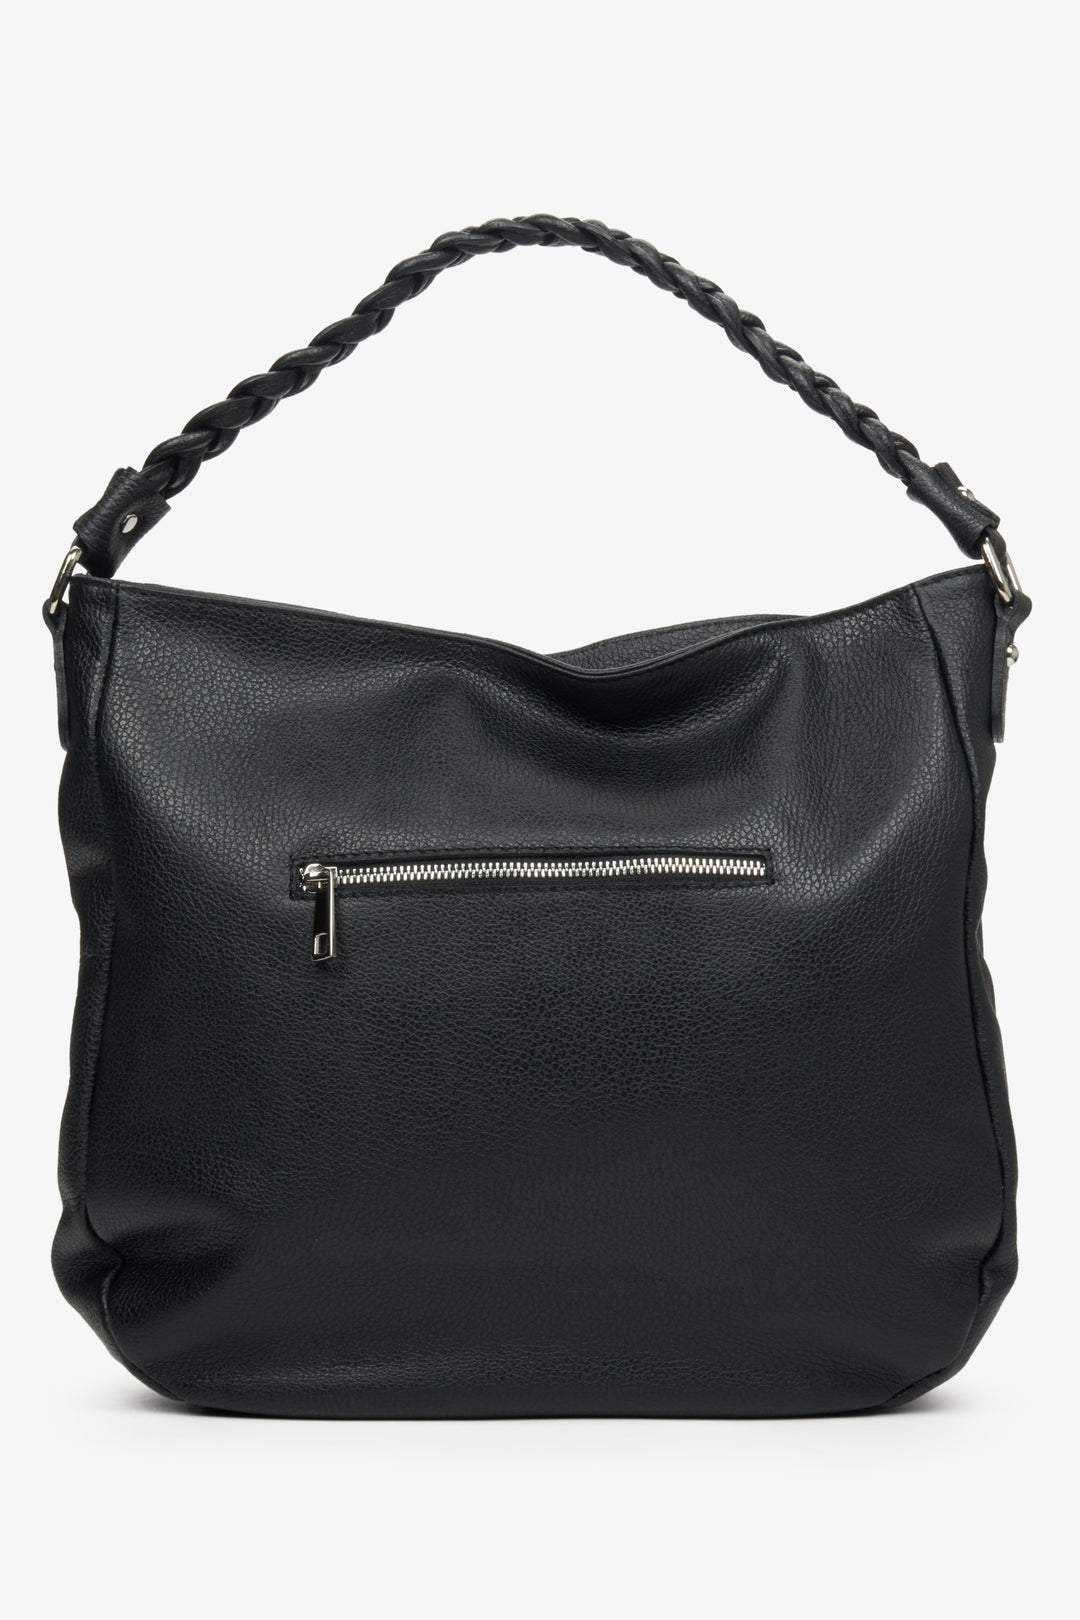 Women's black leather handbag of big size - reverse.